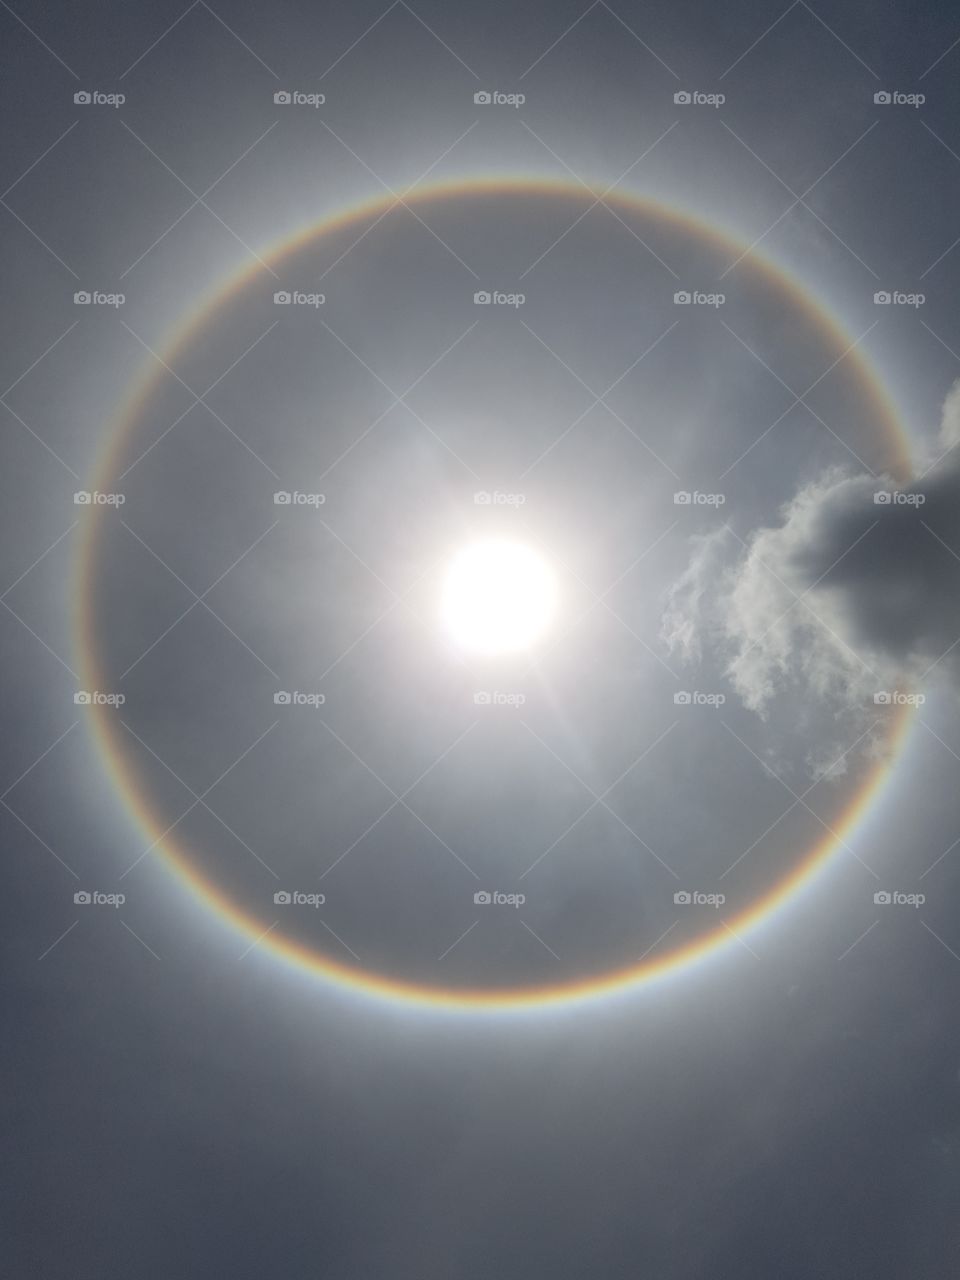 circle rainbow aura full spectrum around the sun in the sky